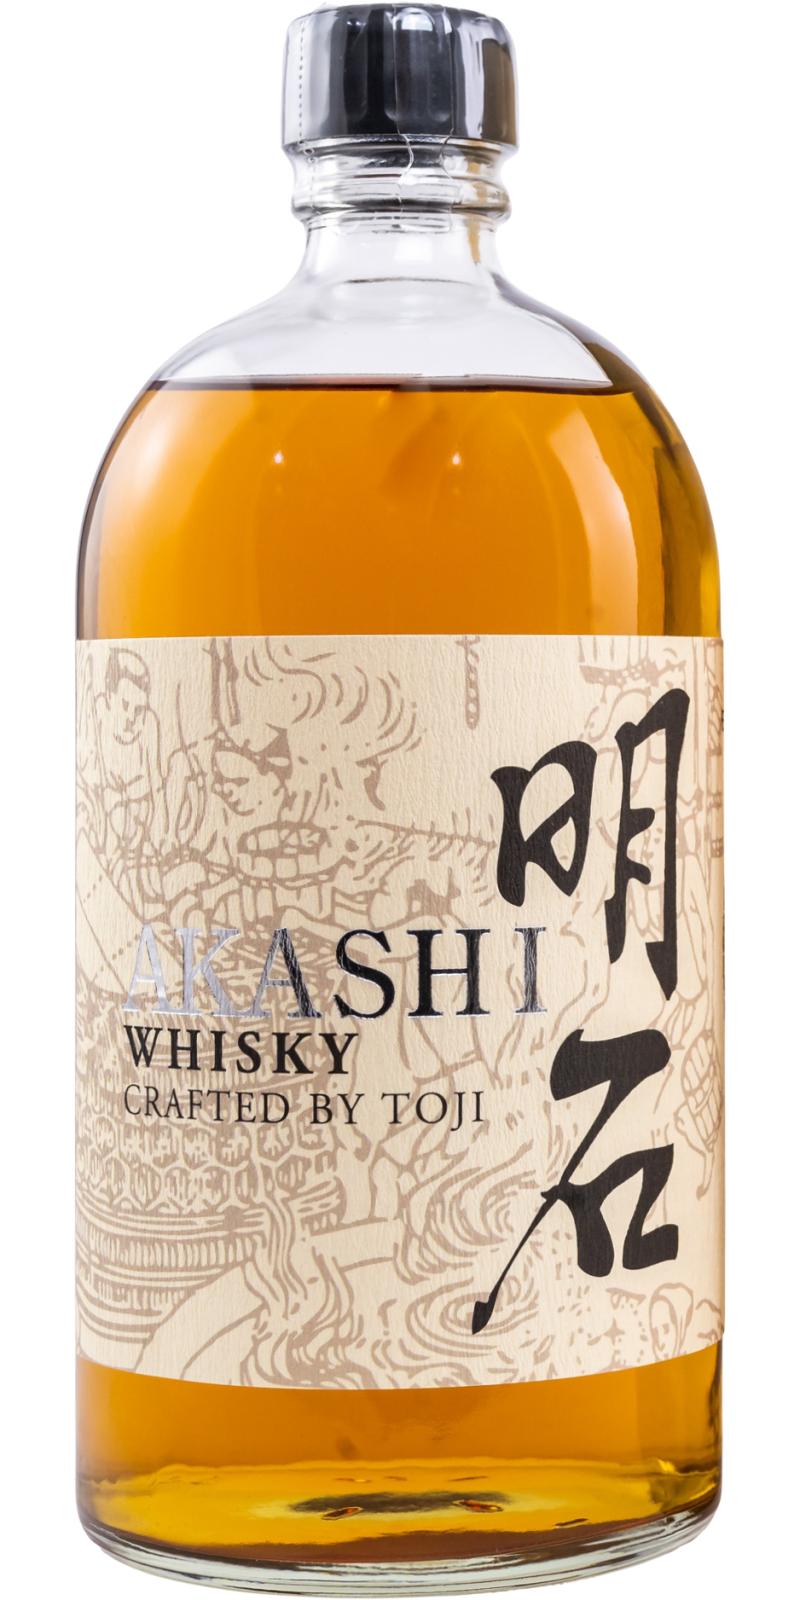 Akashi Whisky - Ratings and reviews - Whiskybase